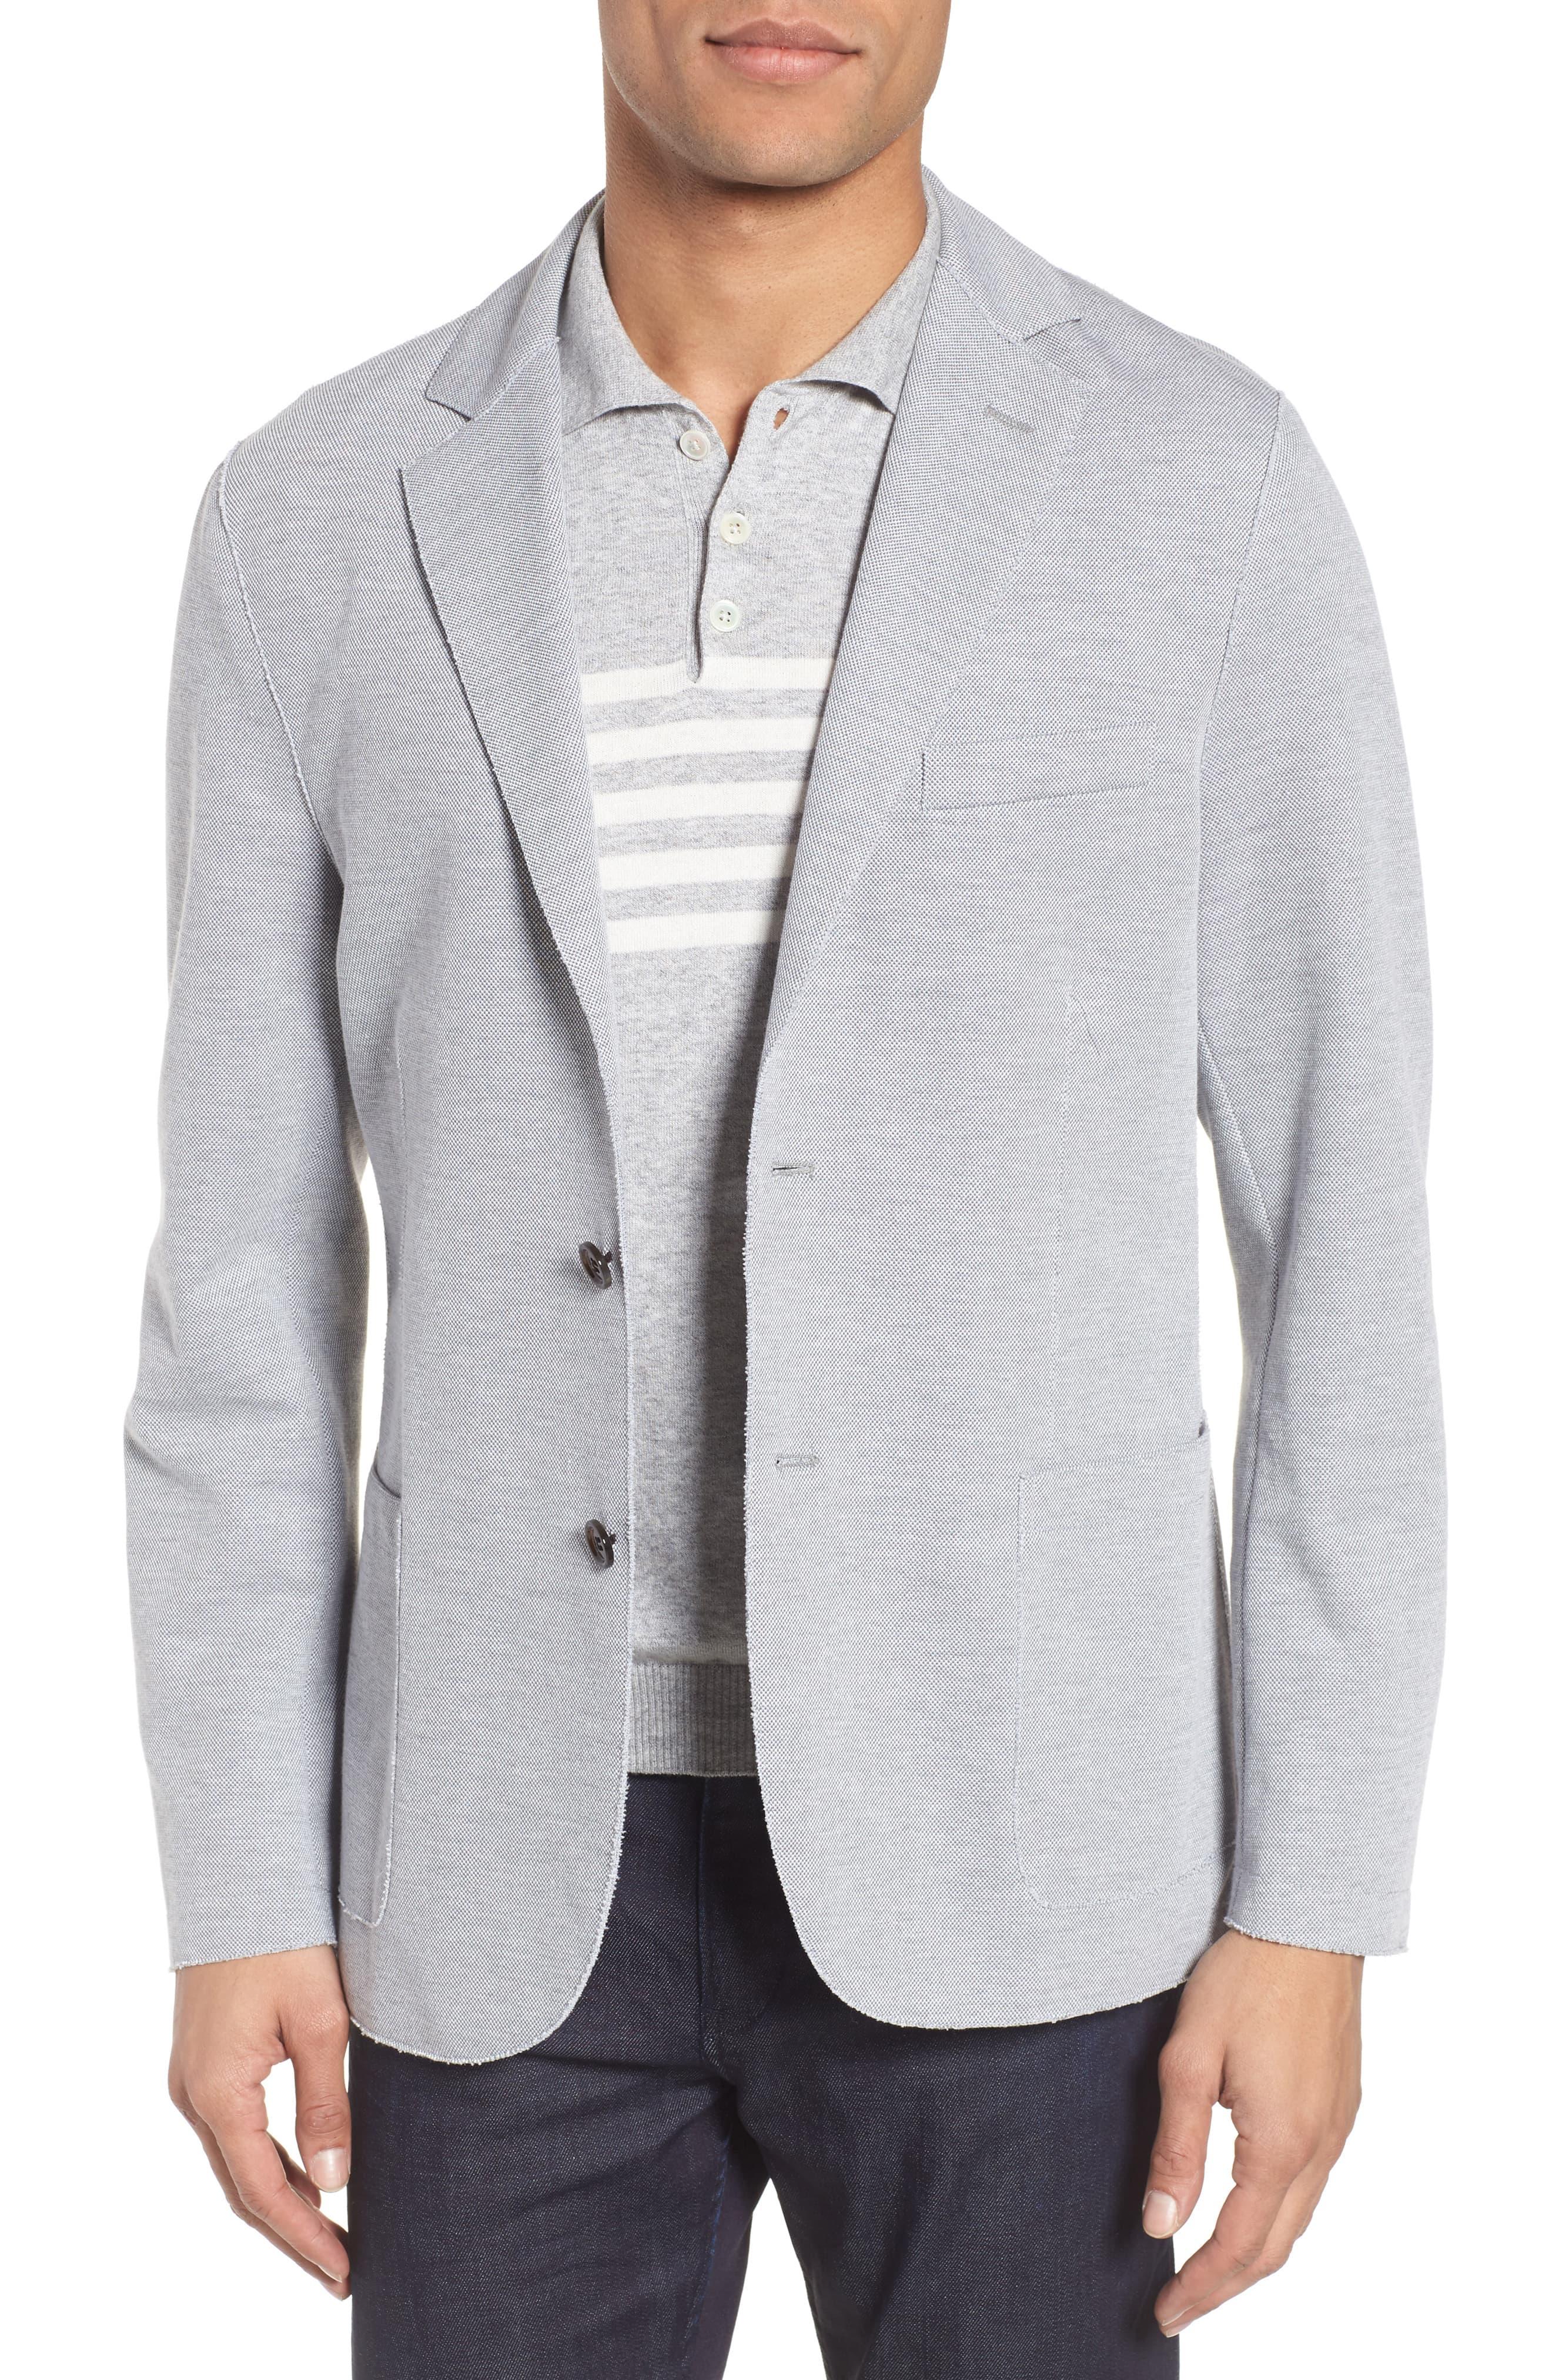 Eleventy Slim Fit Jersey Sport Coat in Grey (Gray) for Men - Lyst